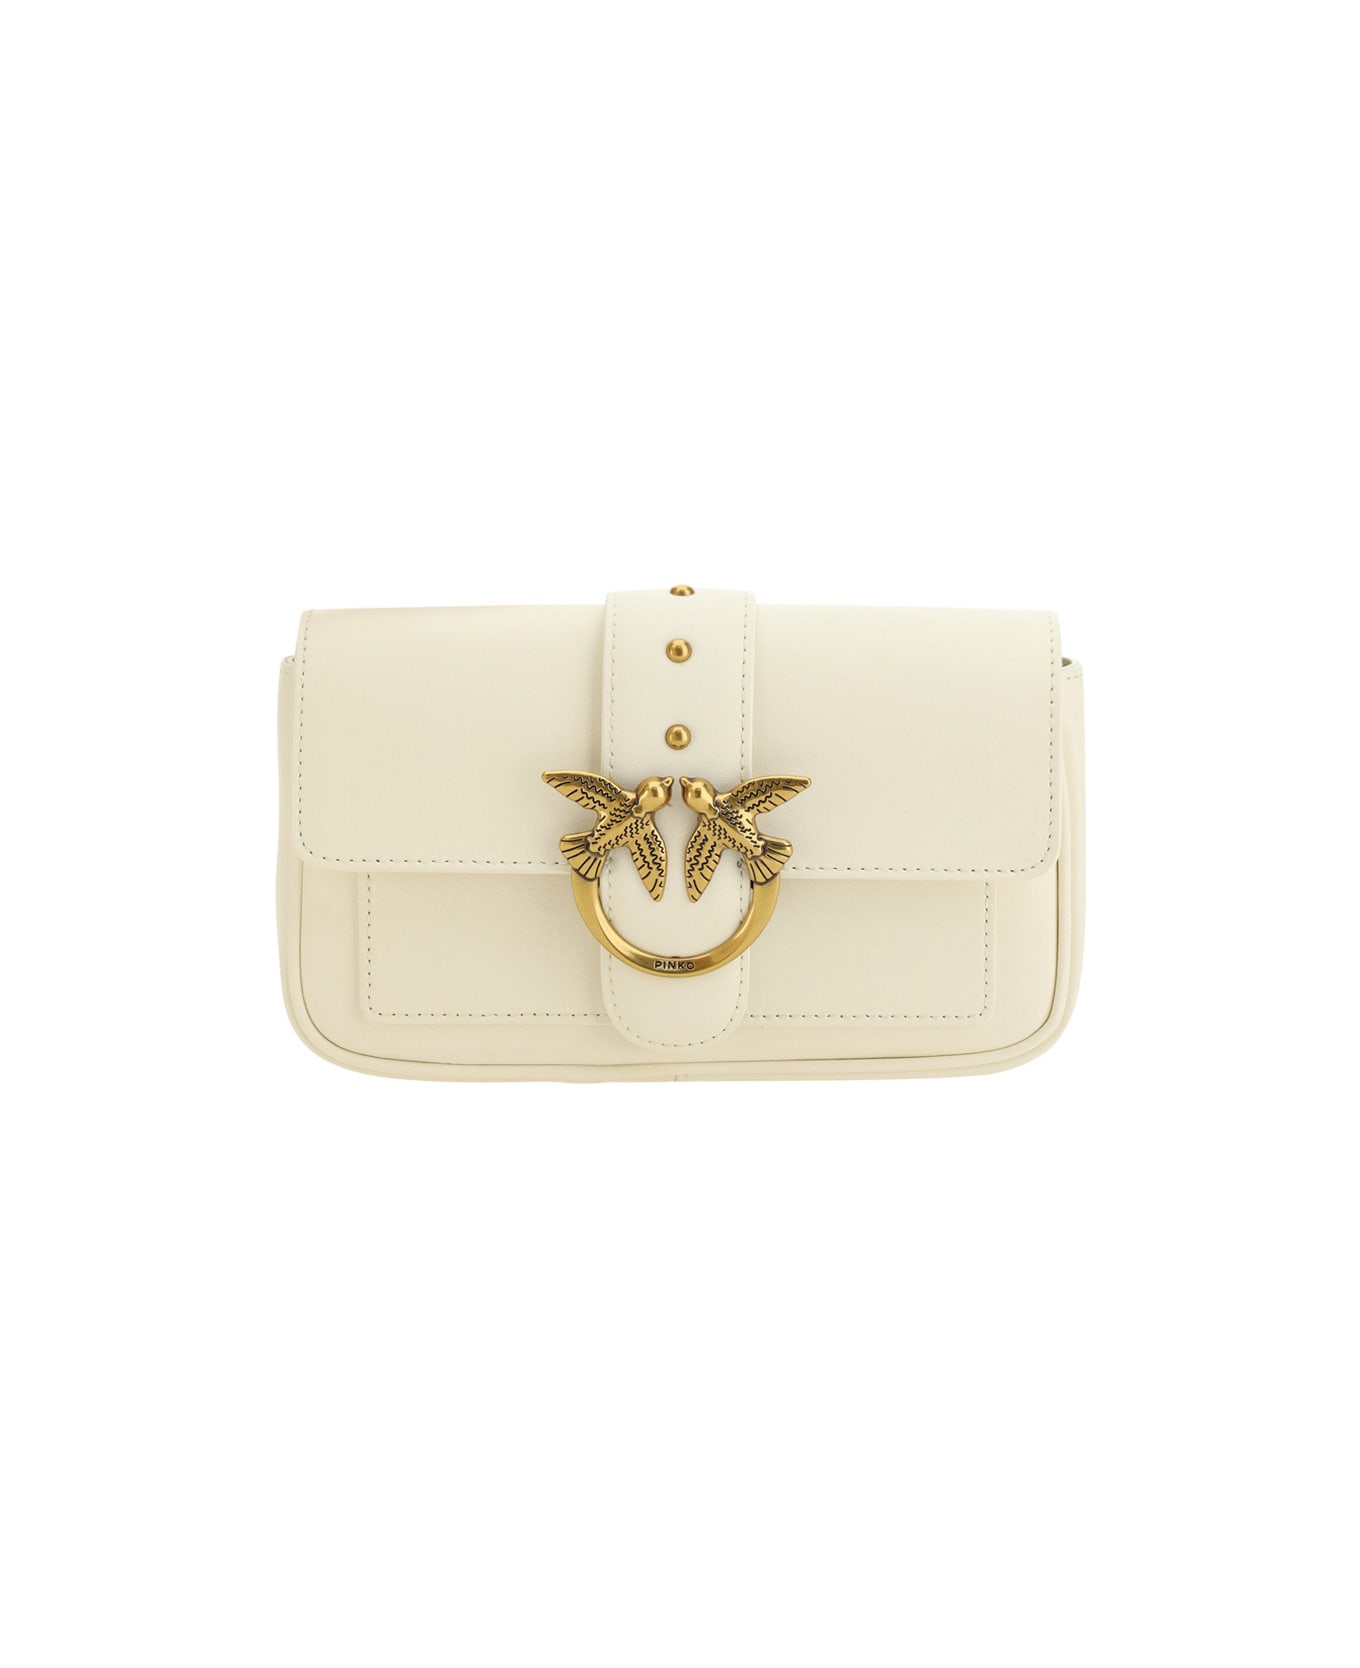 Pinko Love One Pocket Crossbody Bag - Q Bianco Seta Antique Gold クラッチバッグ